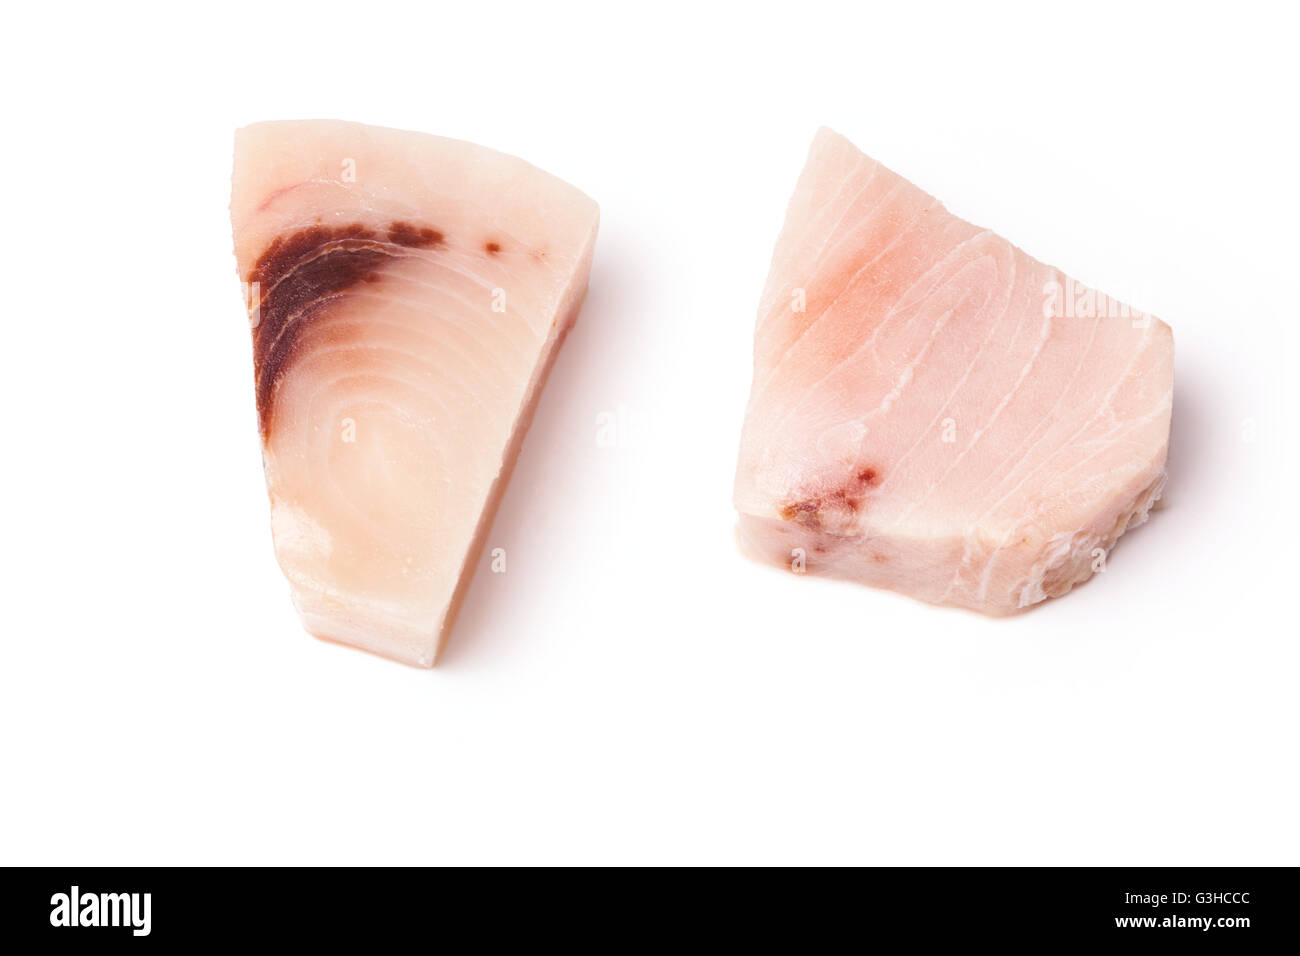 Swordfish ( Xiphais gladius) steak portion uncooked and isolated on a white studio background. Stock Photo